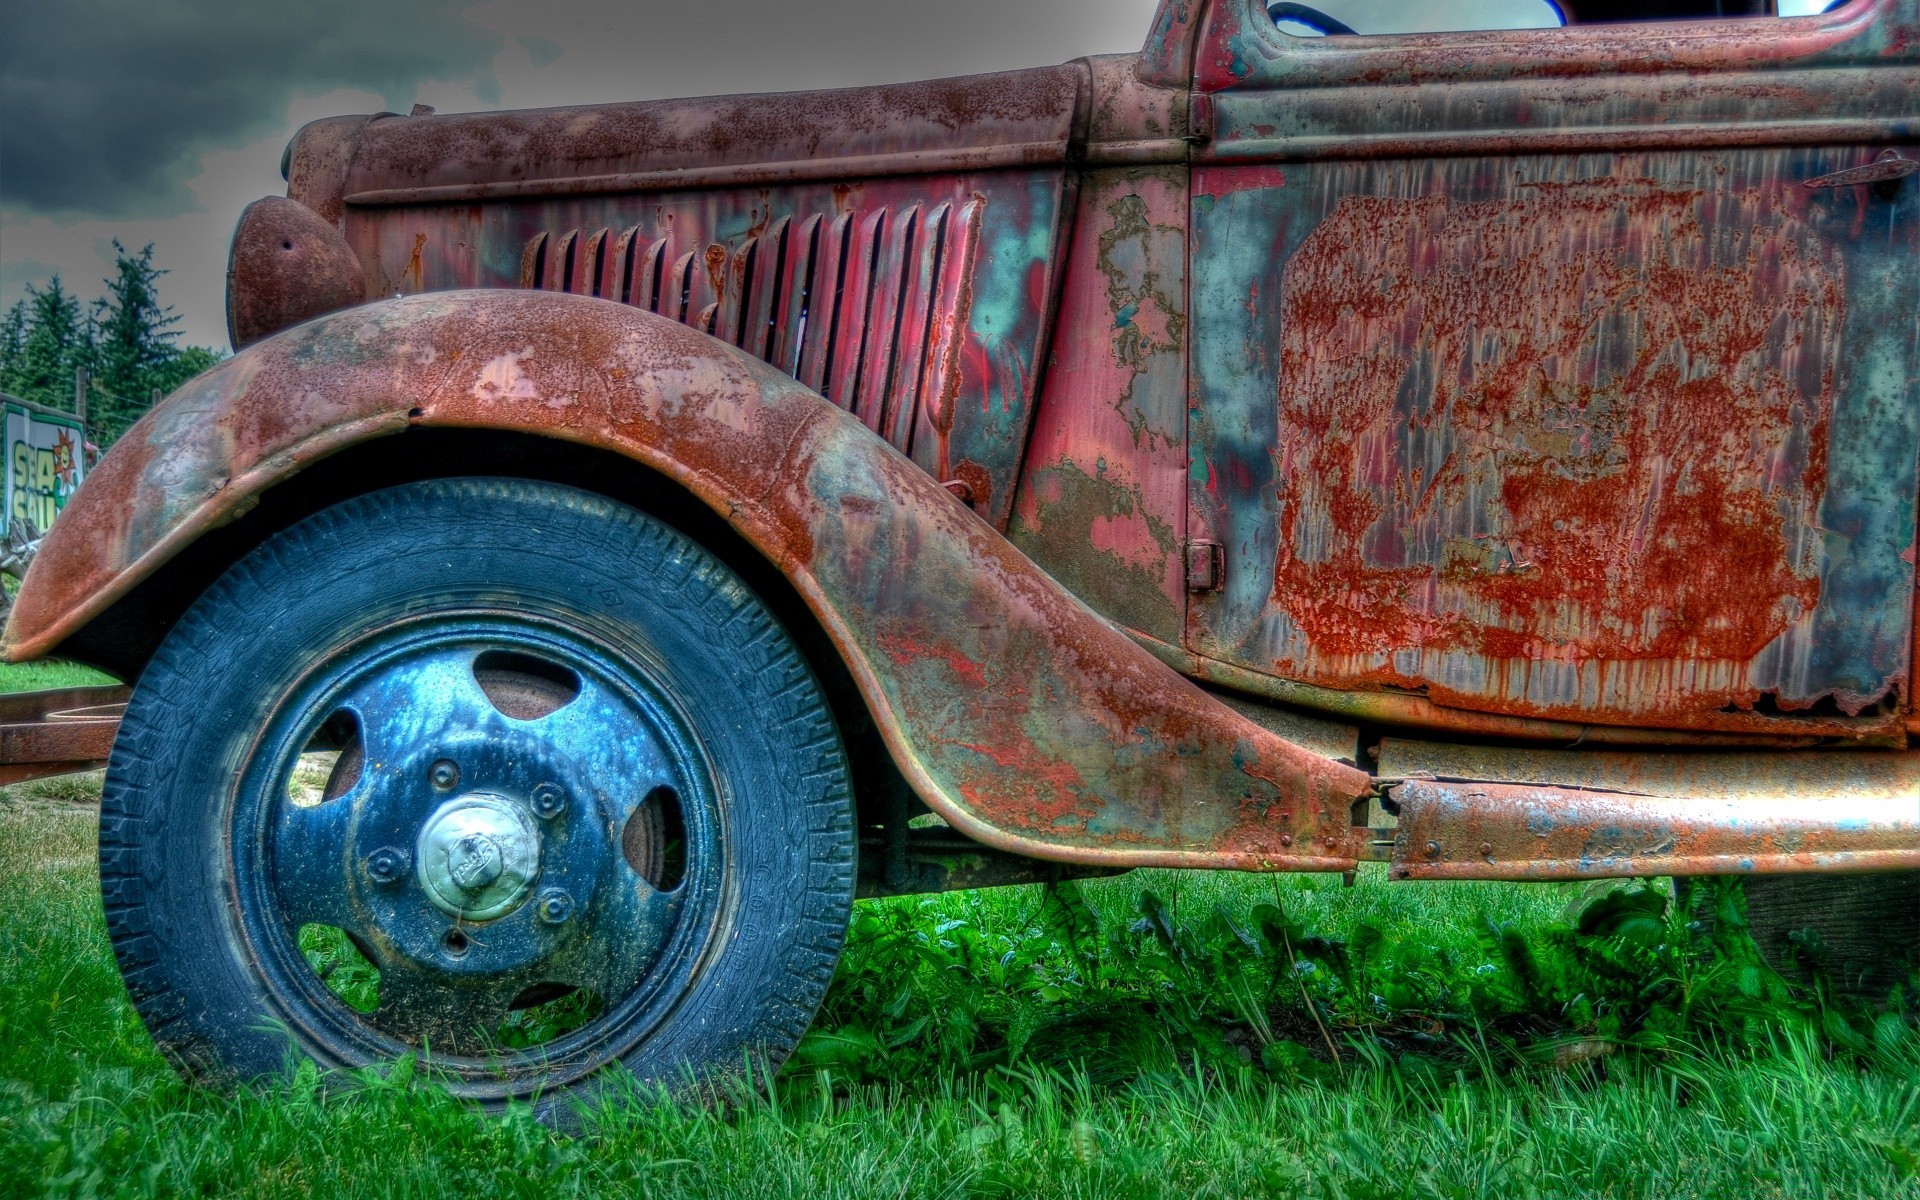 retro cars old rust vintage rusty retro antique abandoned vehicle wheel transportation system car broken dirty